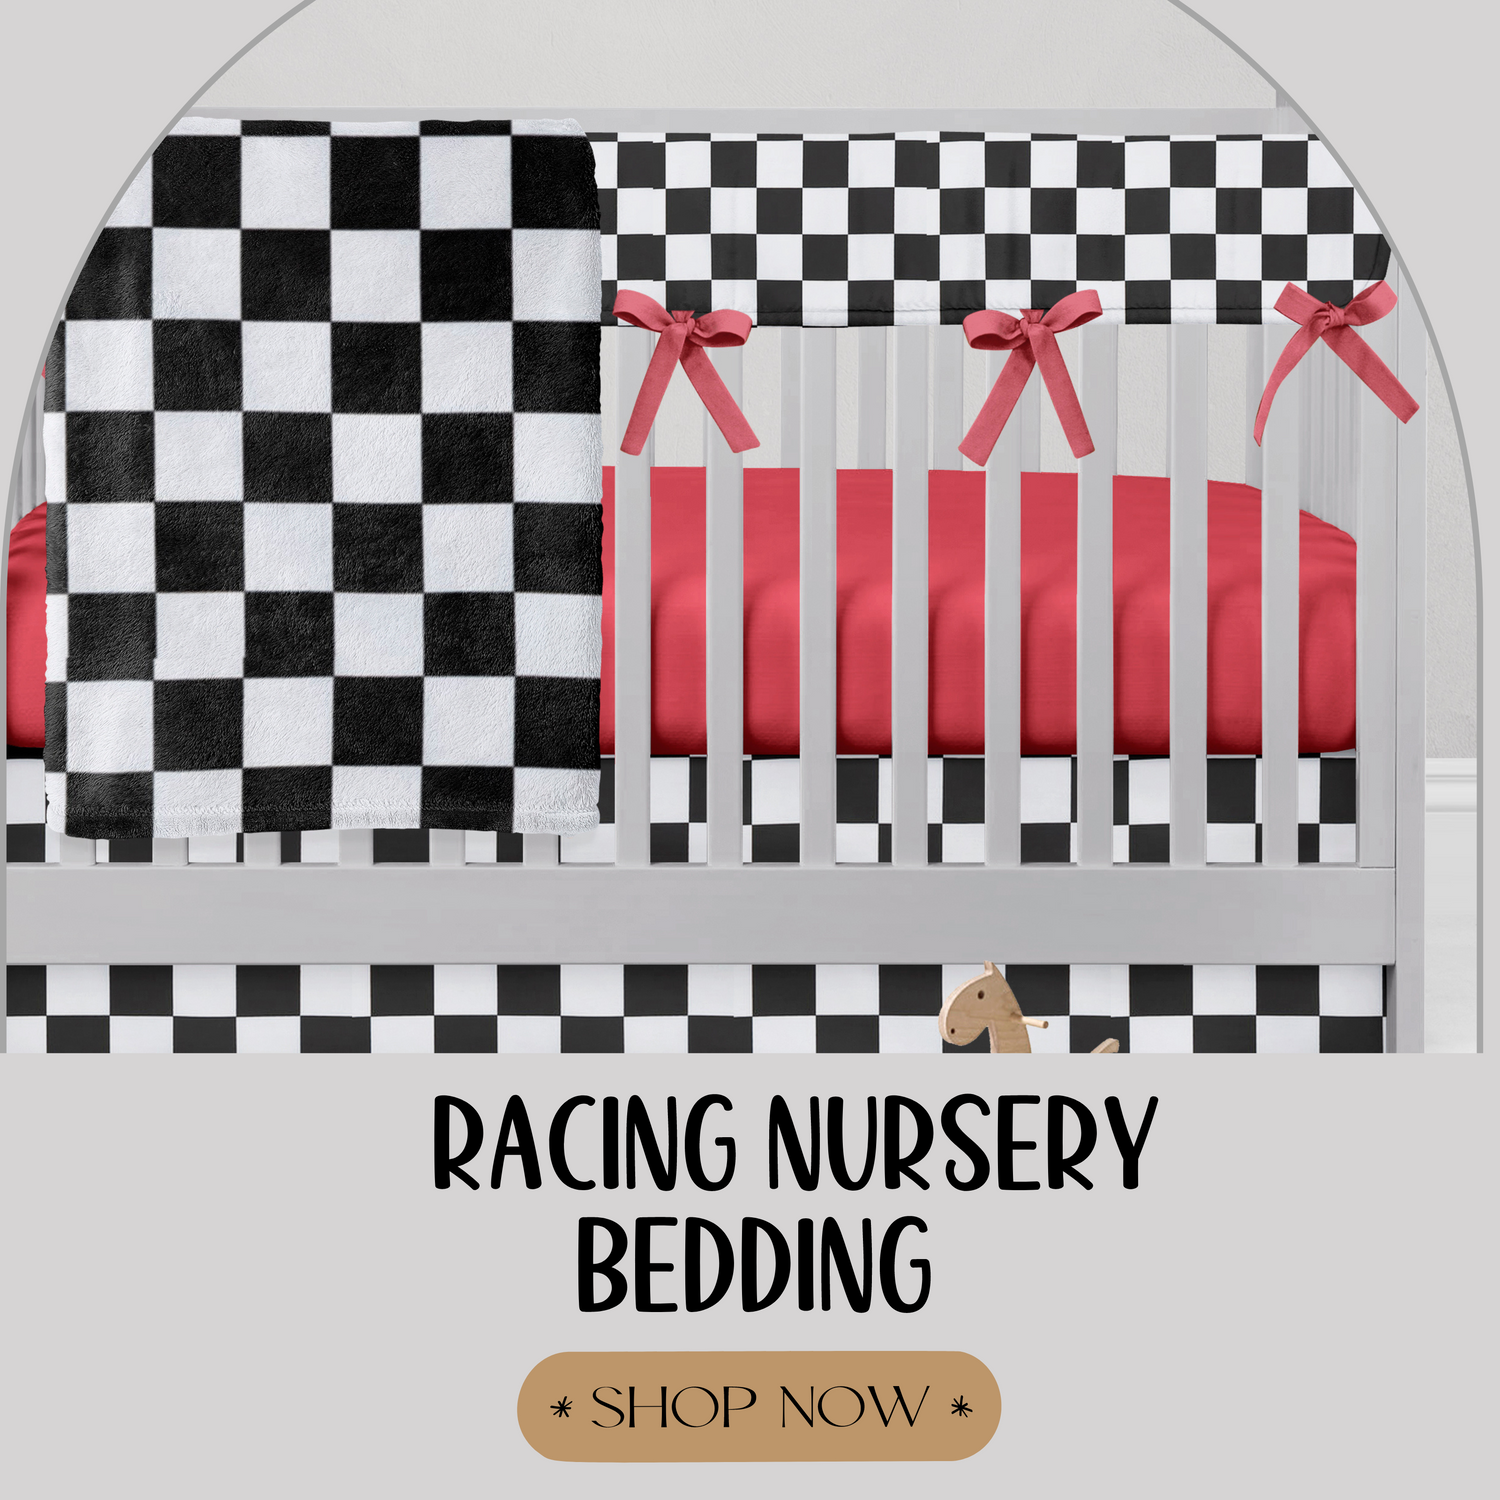 Racing Crib Bedding - Rail Covers, Crib Sheets, Crib Skirts